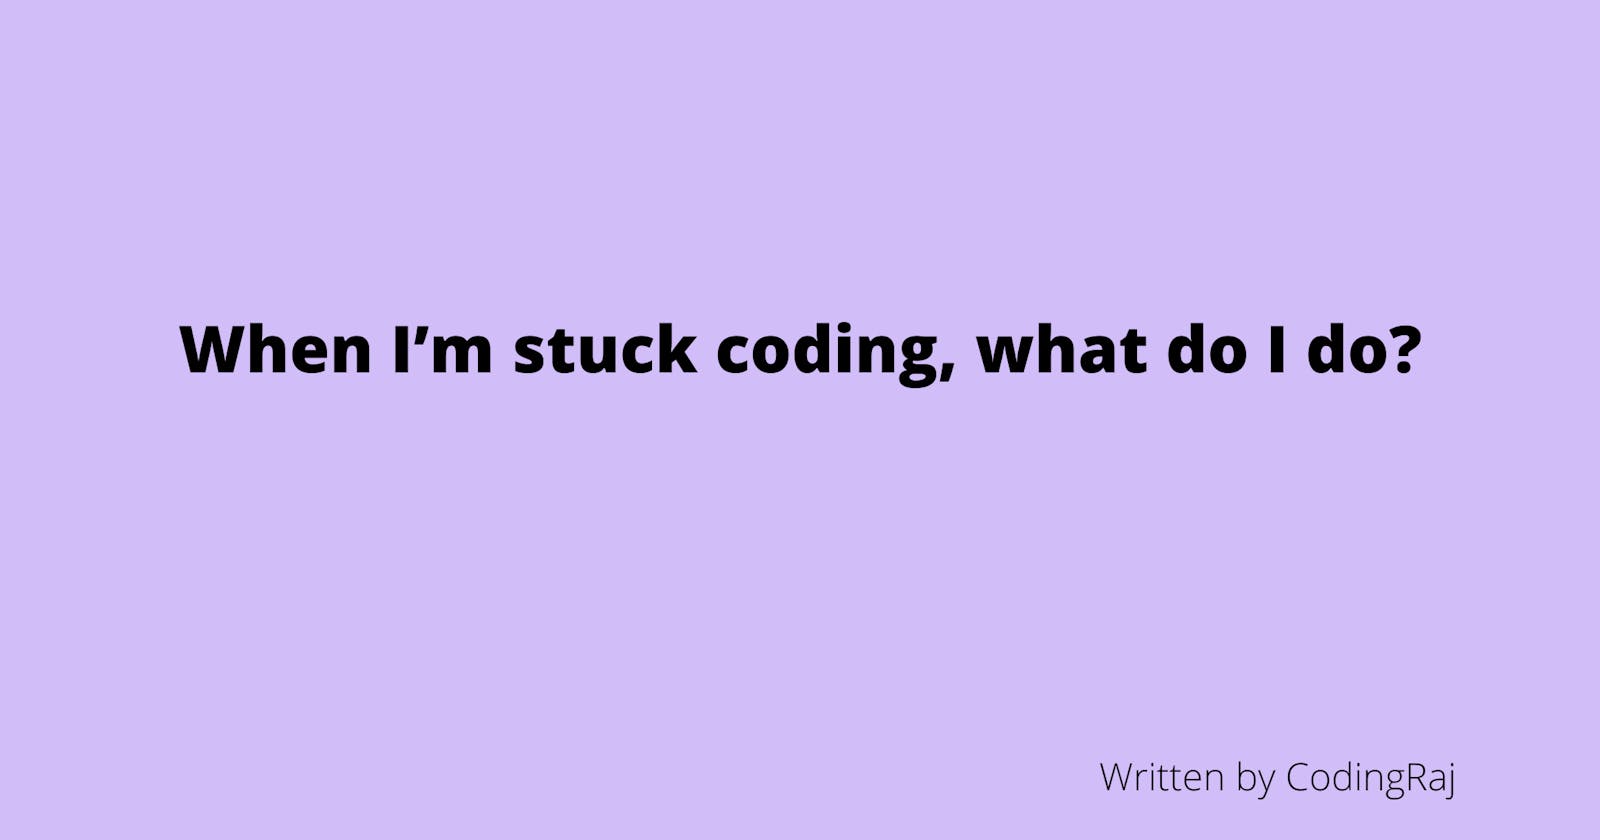 When I’m stuck coding, what do I do?